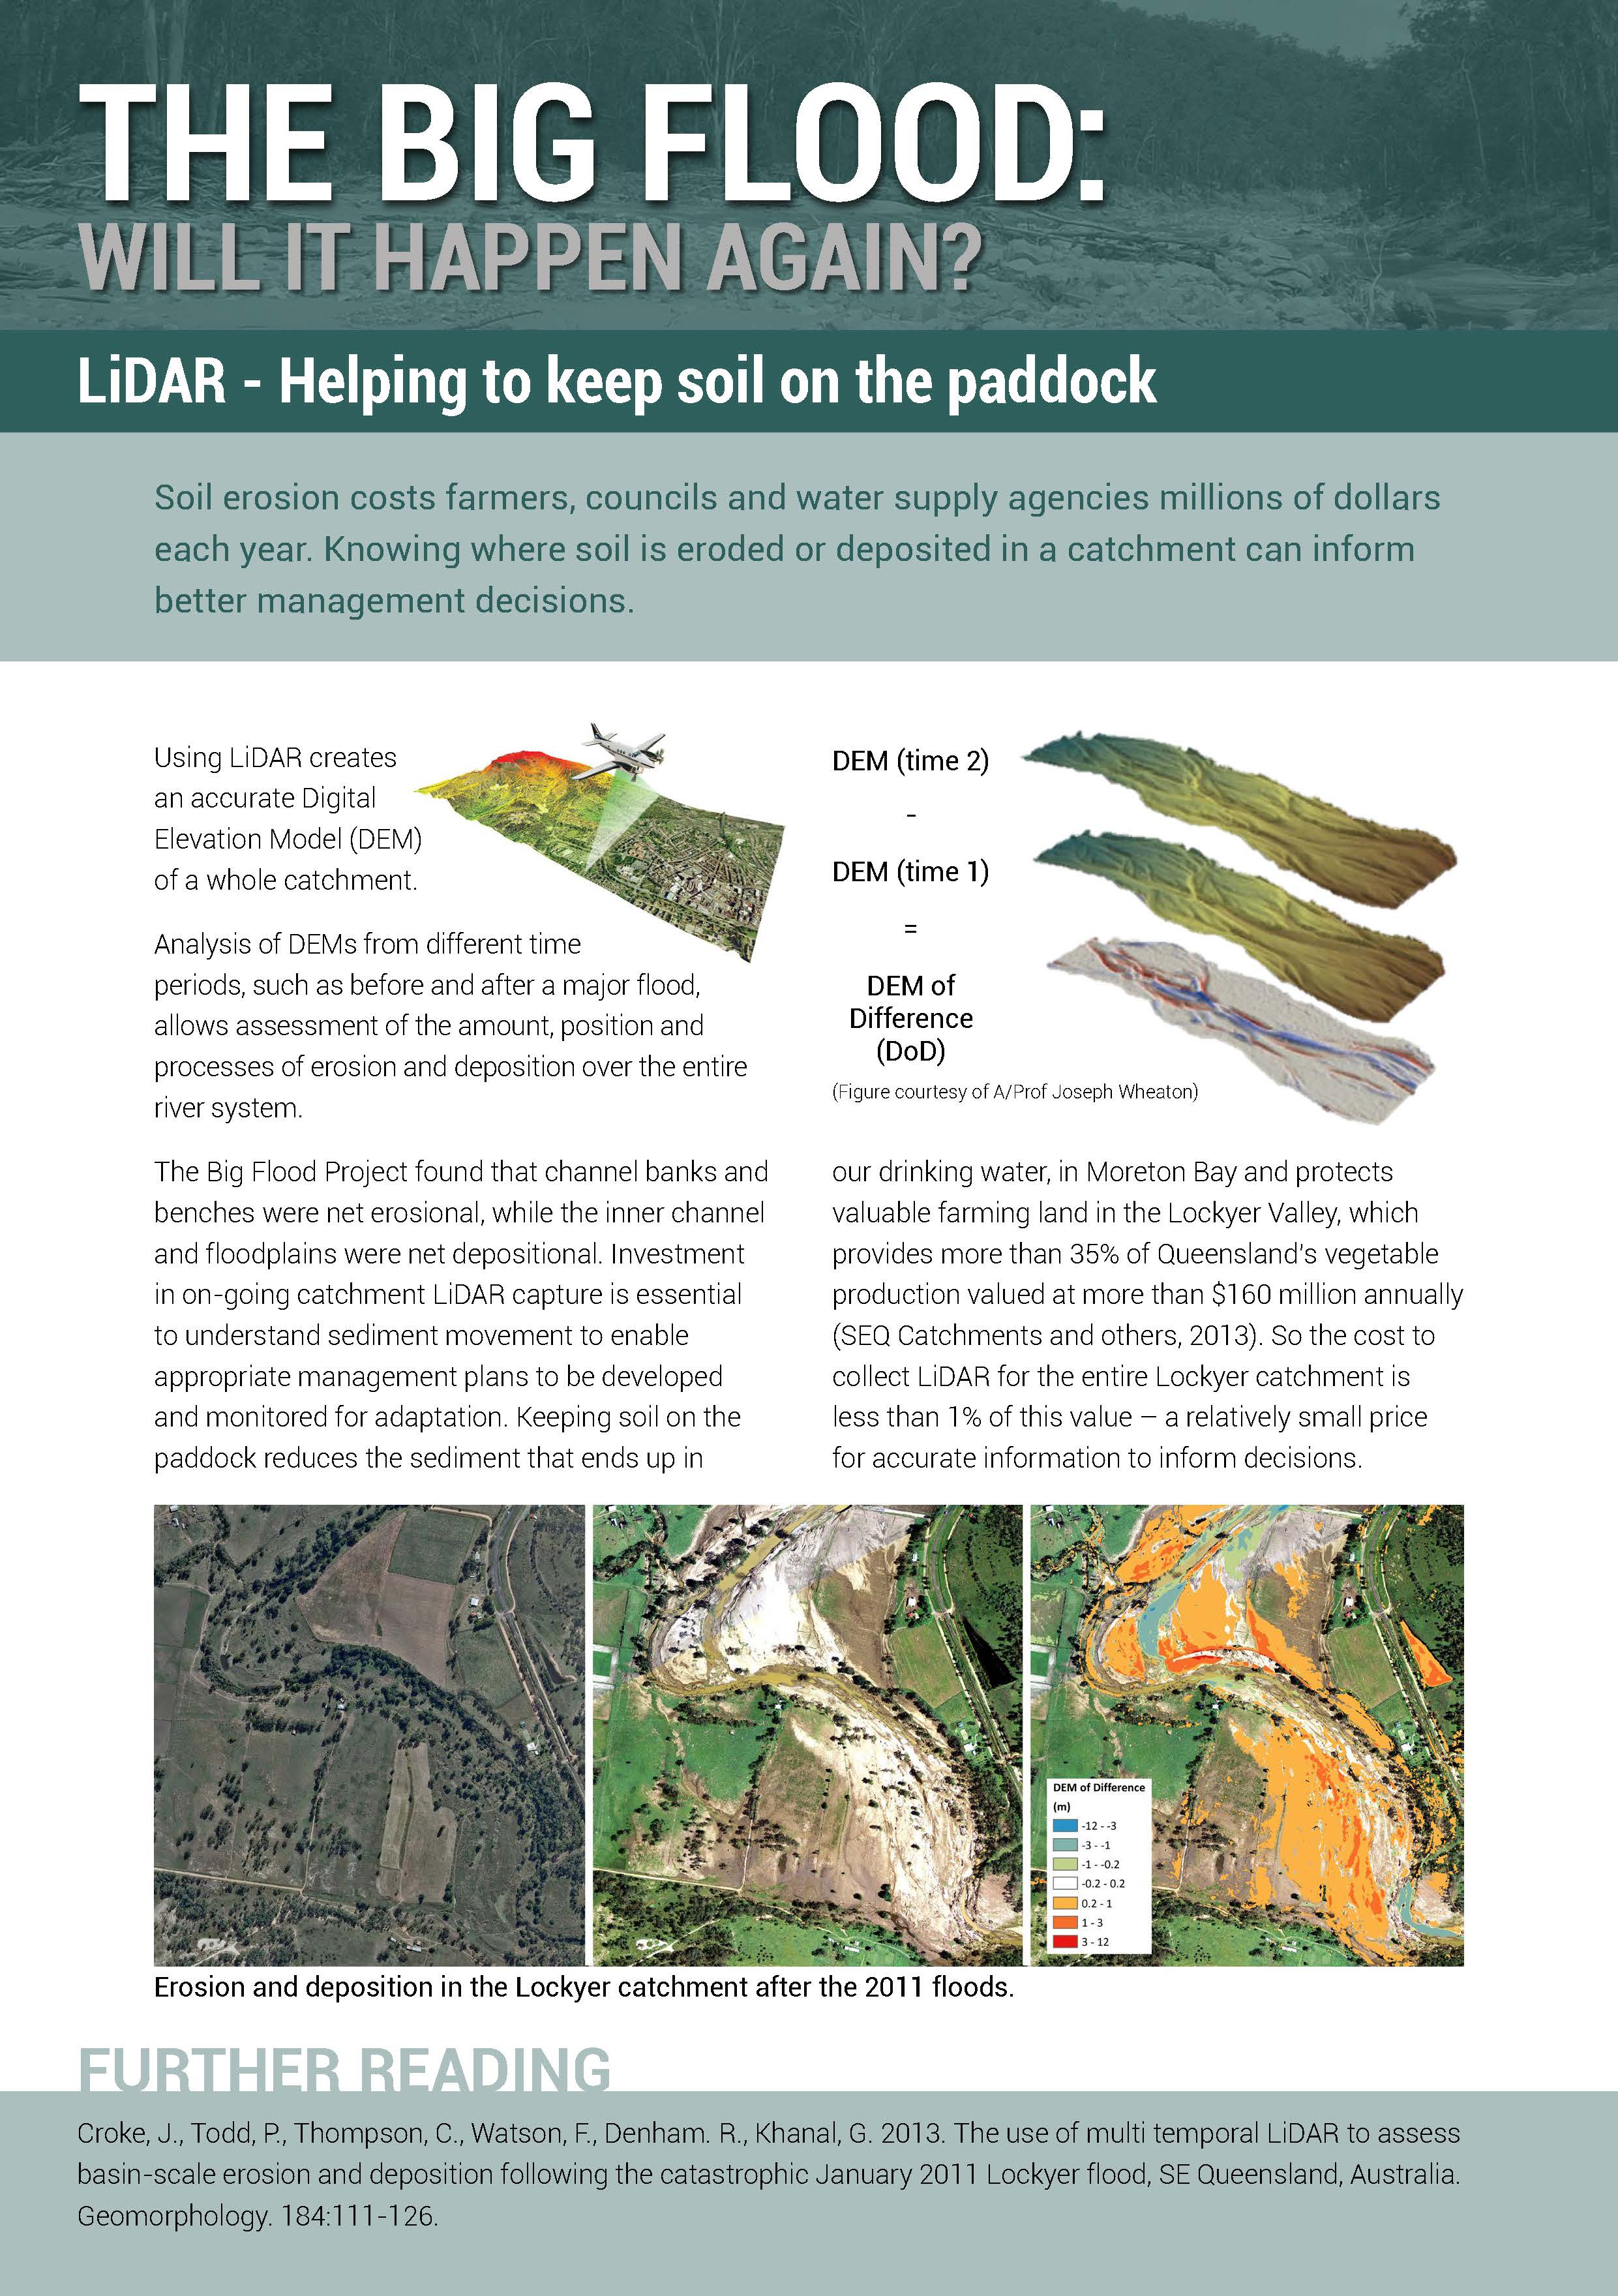 LiDAR - Helping to keep soil on the paddock